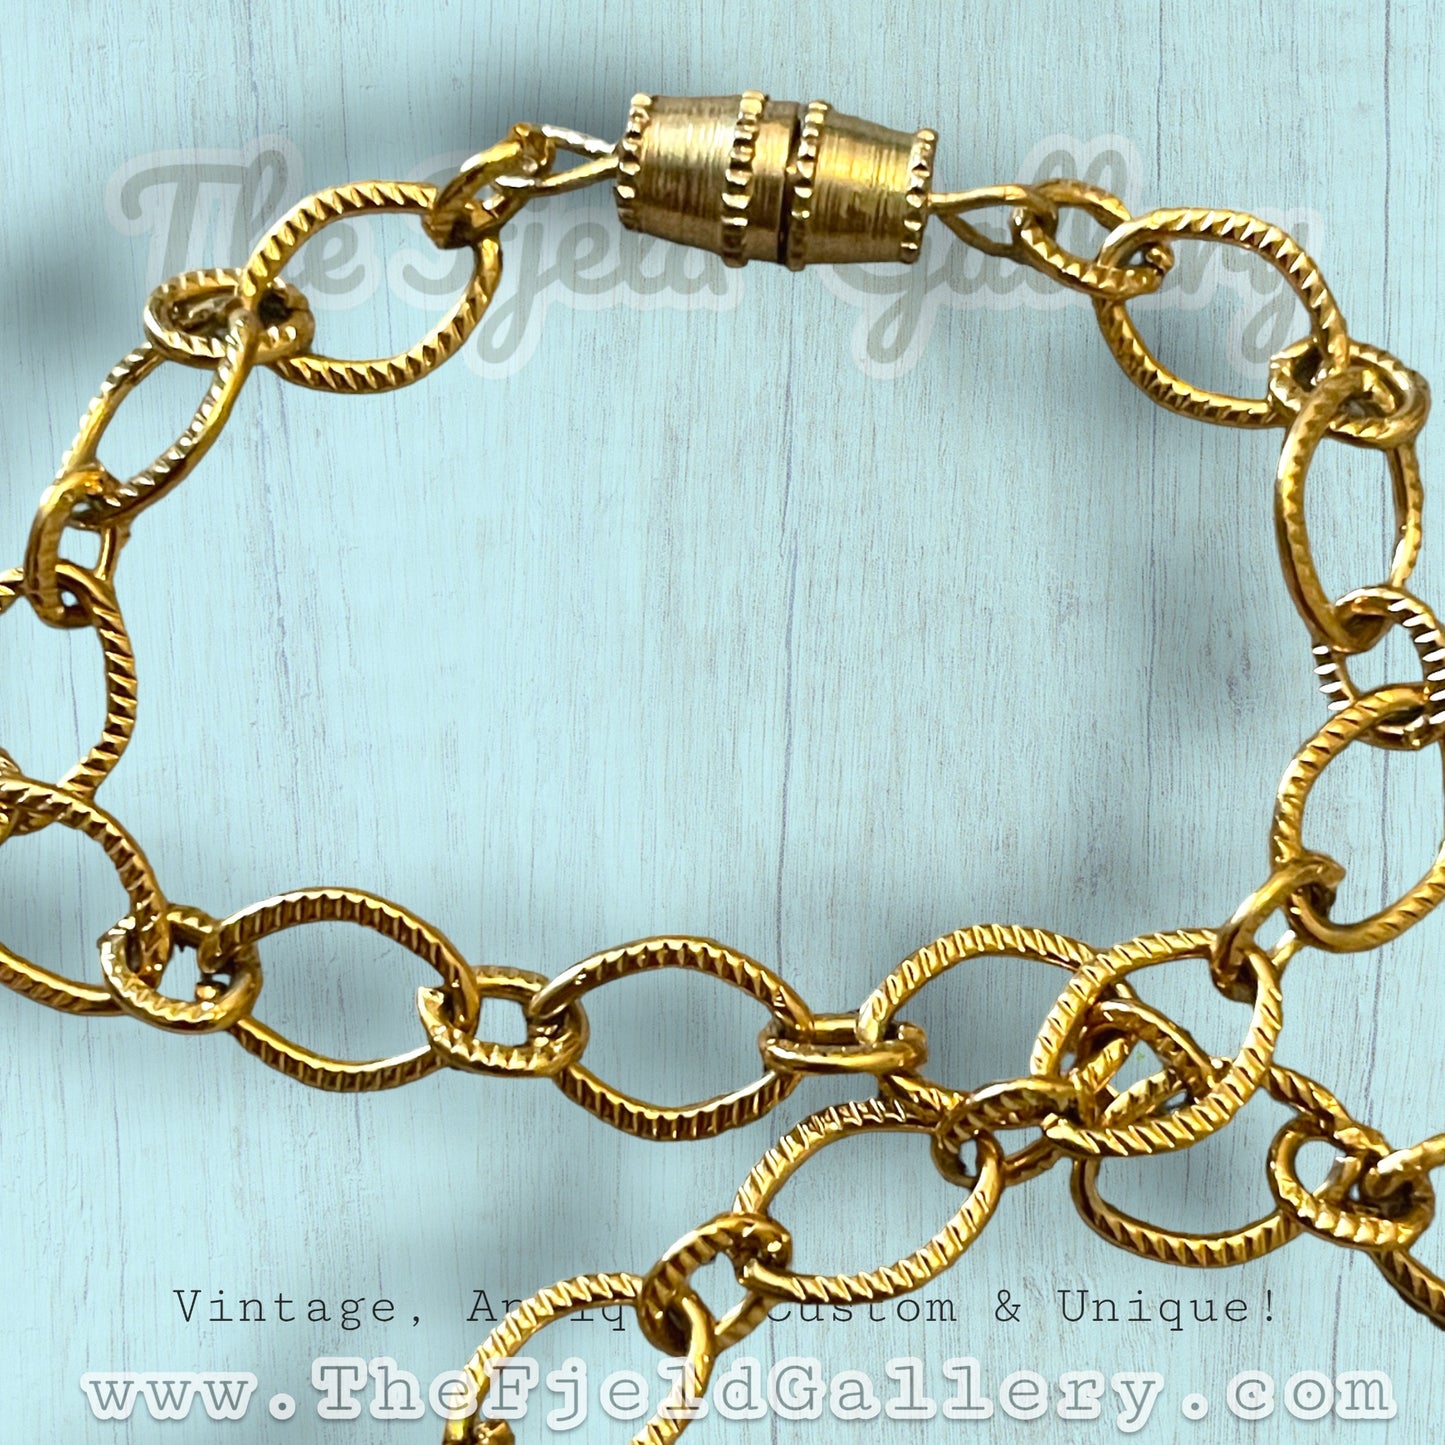 Renaissance Revival 1960’s Gilded Gold Black Cameo Pendant Necklace